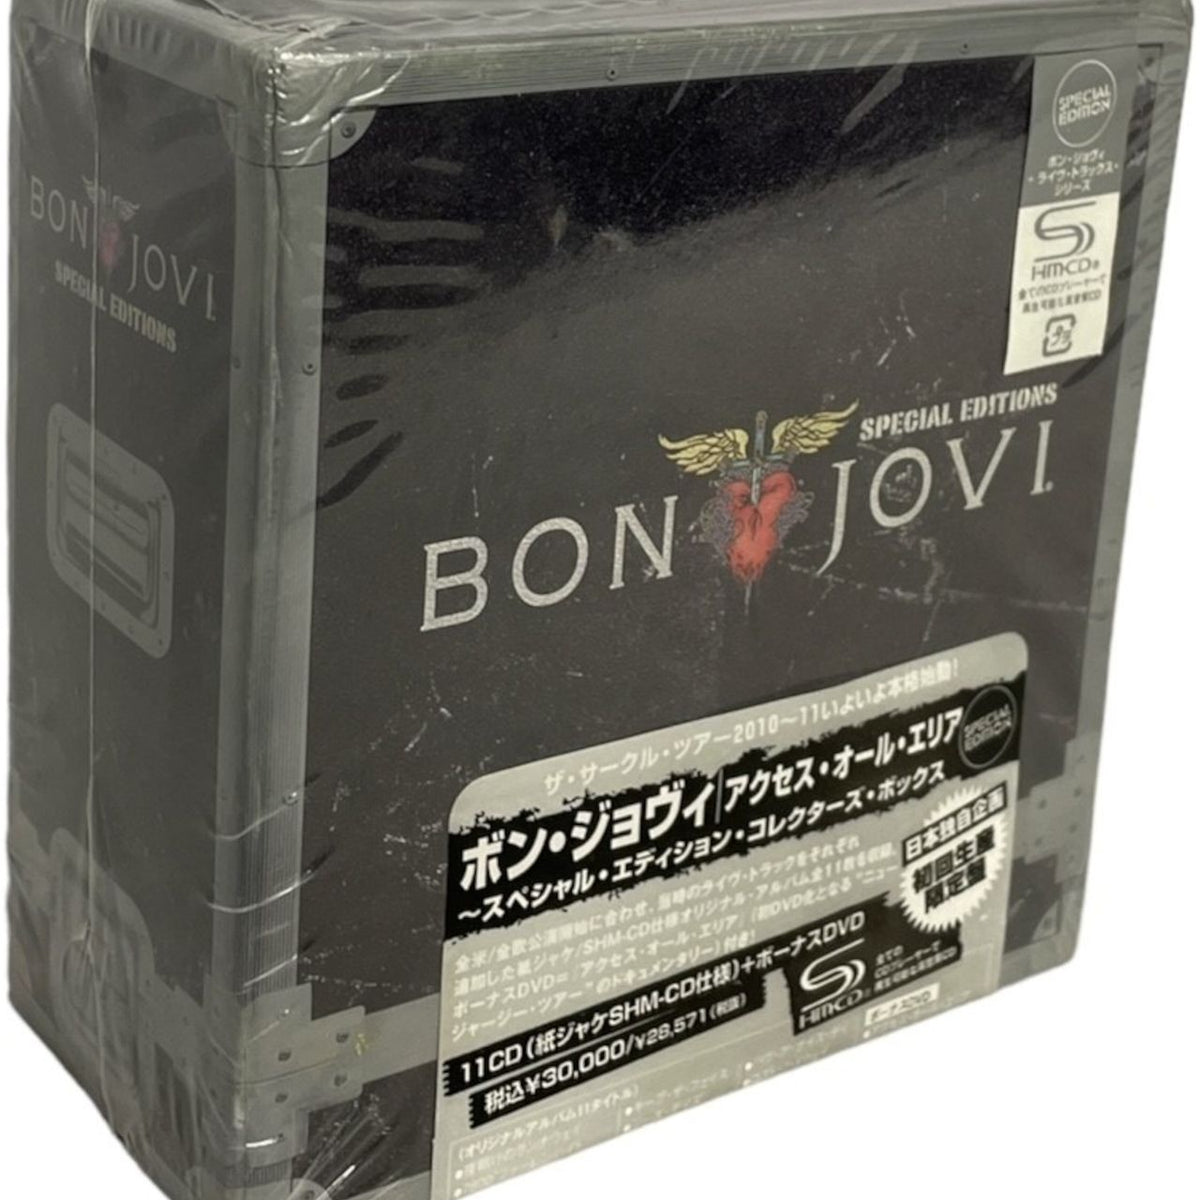 Bon Jovi Tour Box Set - Special Editions Japanese SHM CD 